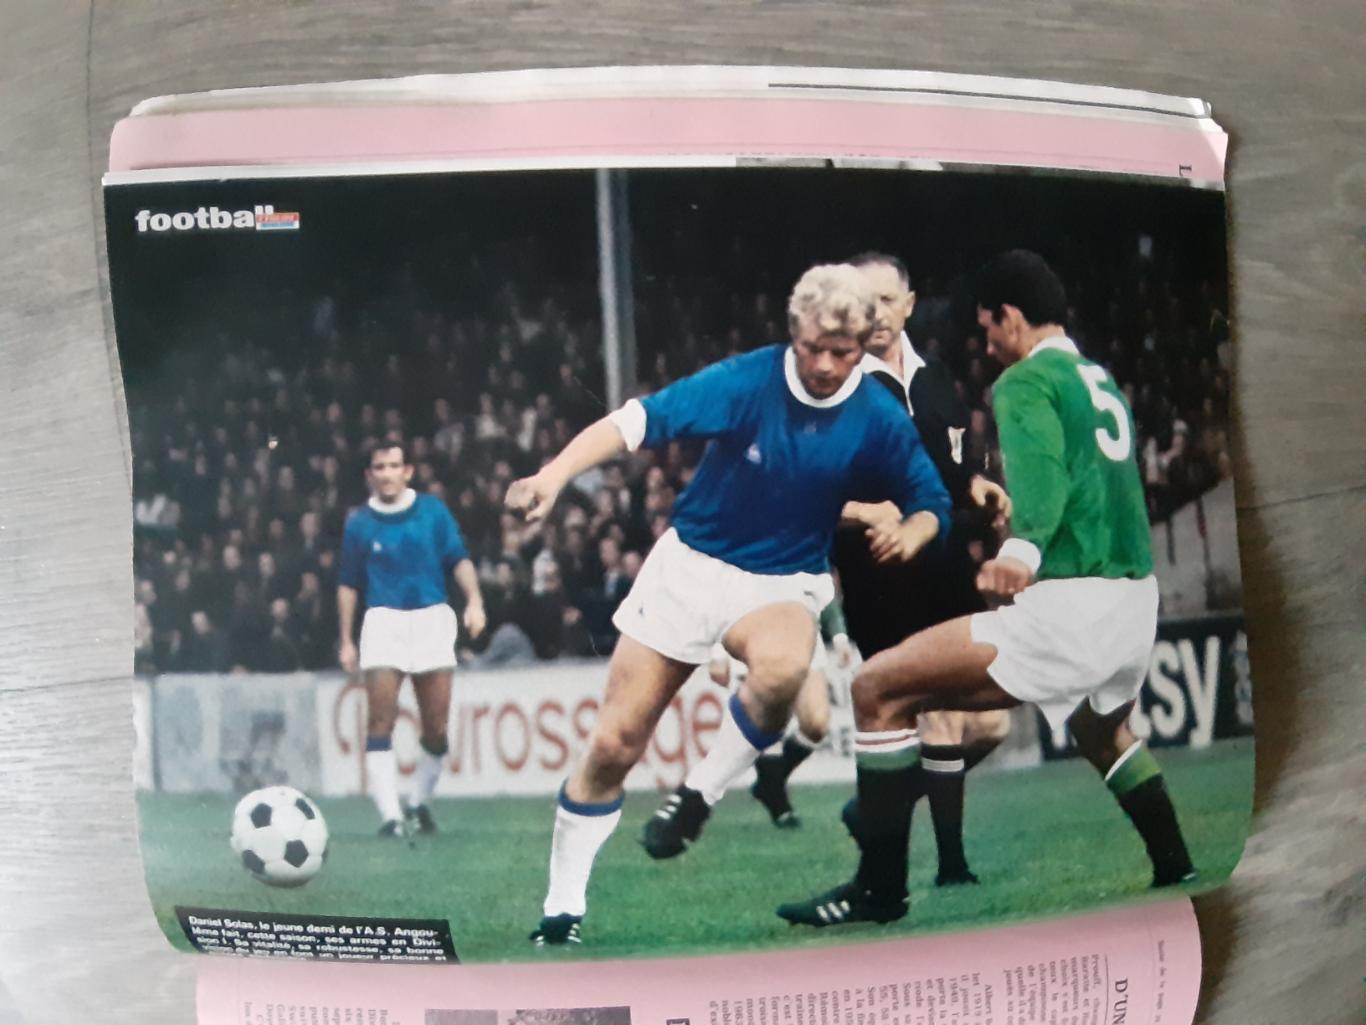 Football Magazine1970 4